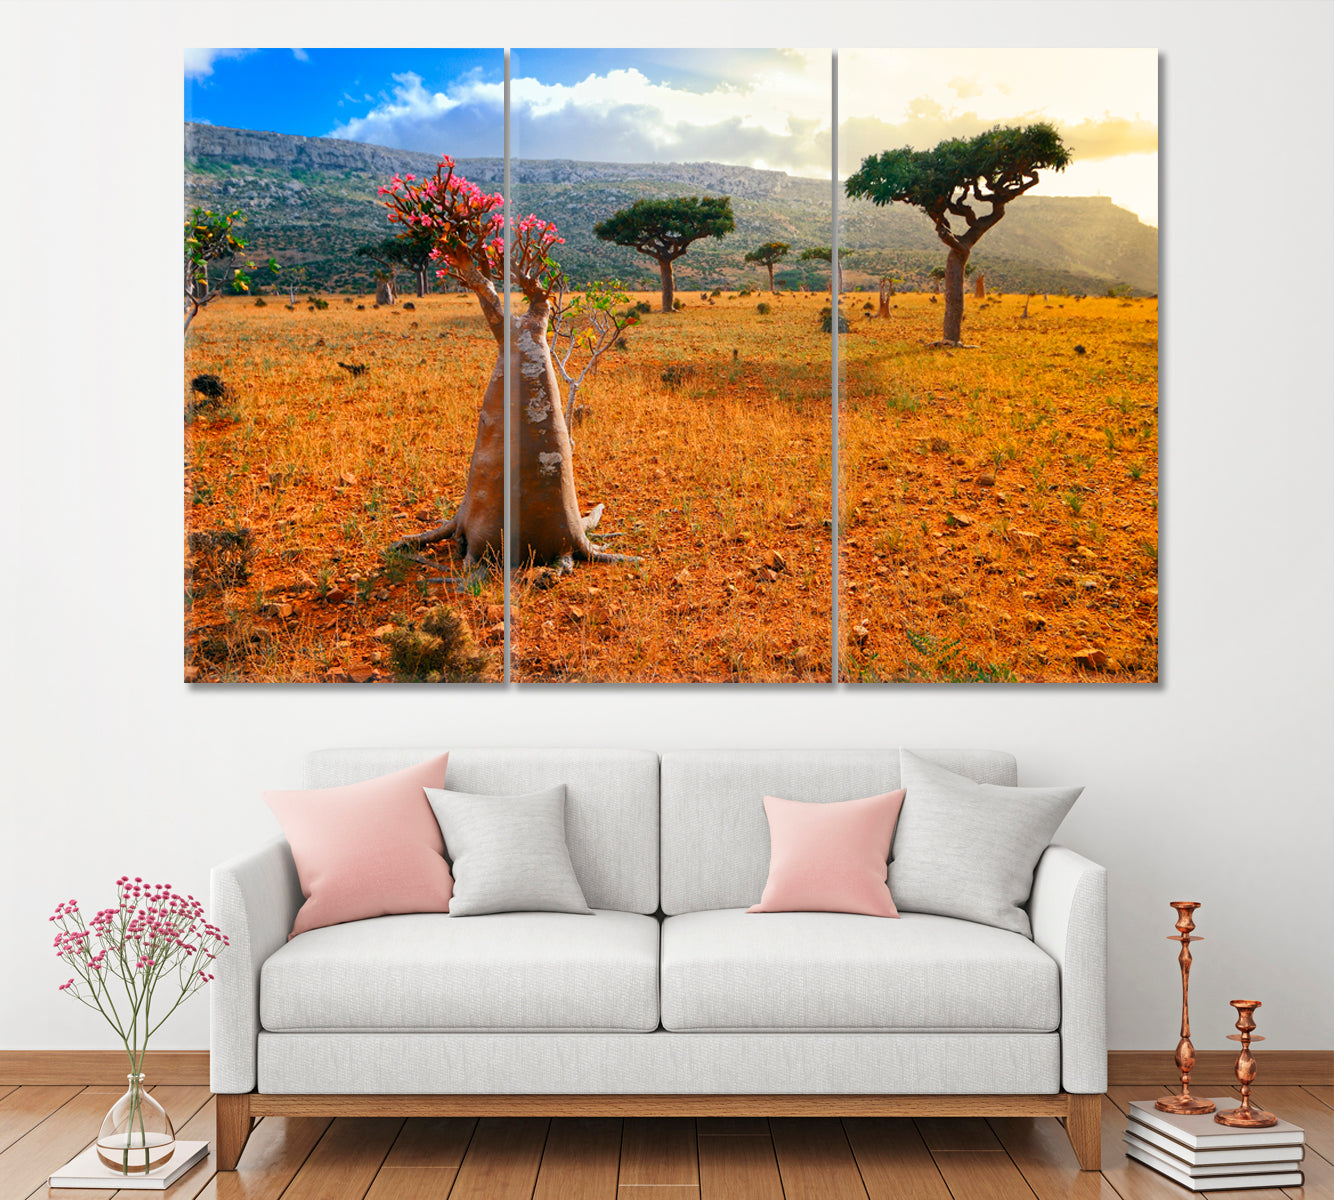 Flowering Bottle Trees (Desert Rose) Socotra Yemen Canvas Print ArtLexy 3 Panels 36"x24" inches 